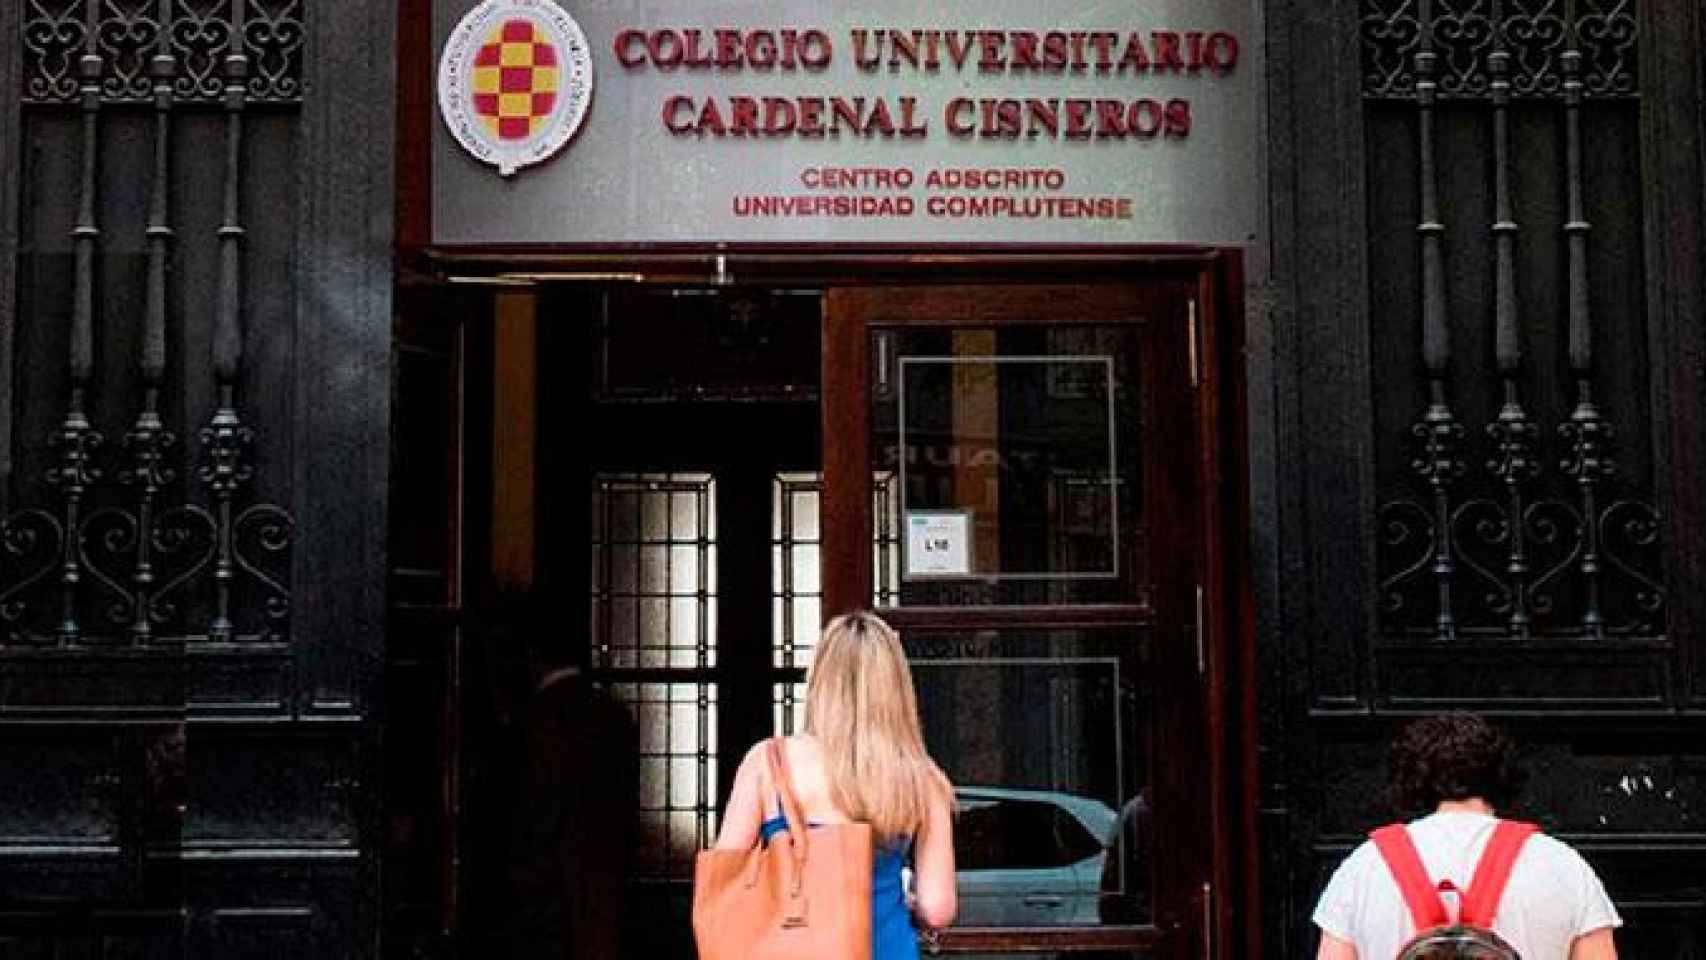 Centro universitario Cardenal Cisneros